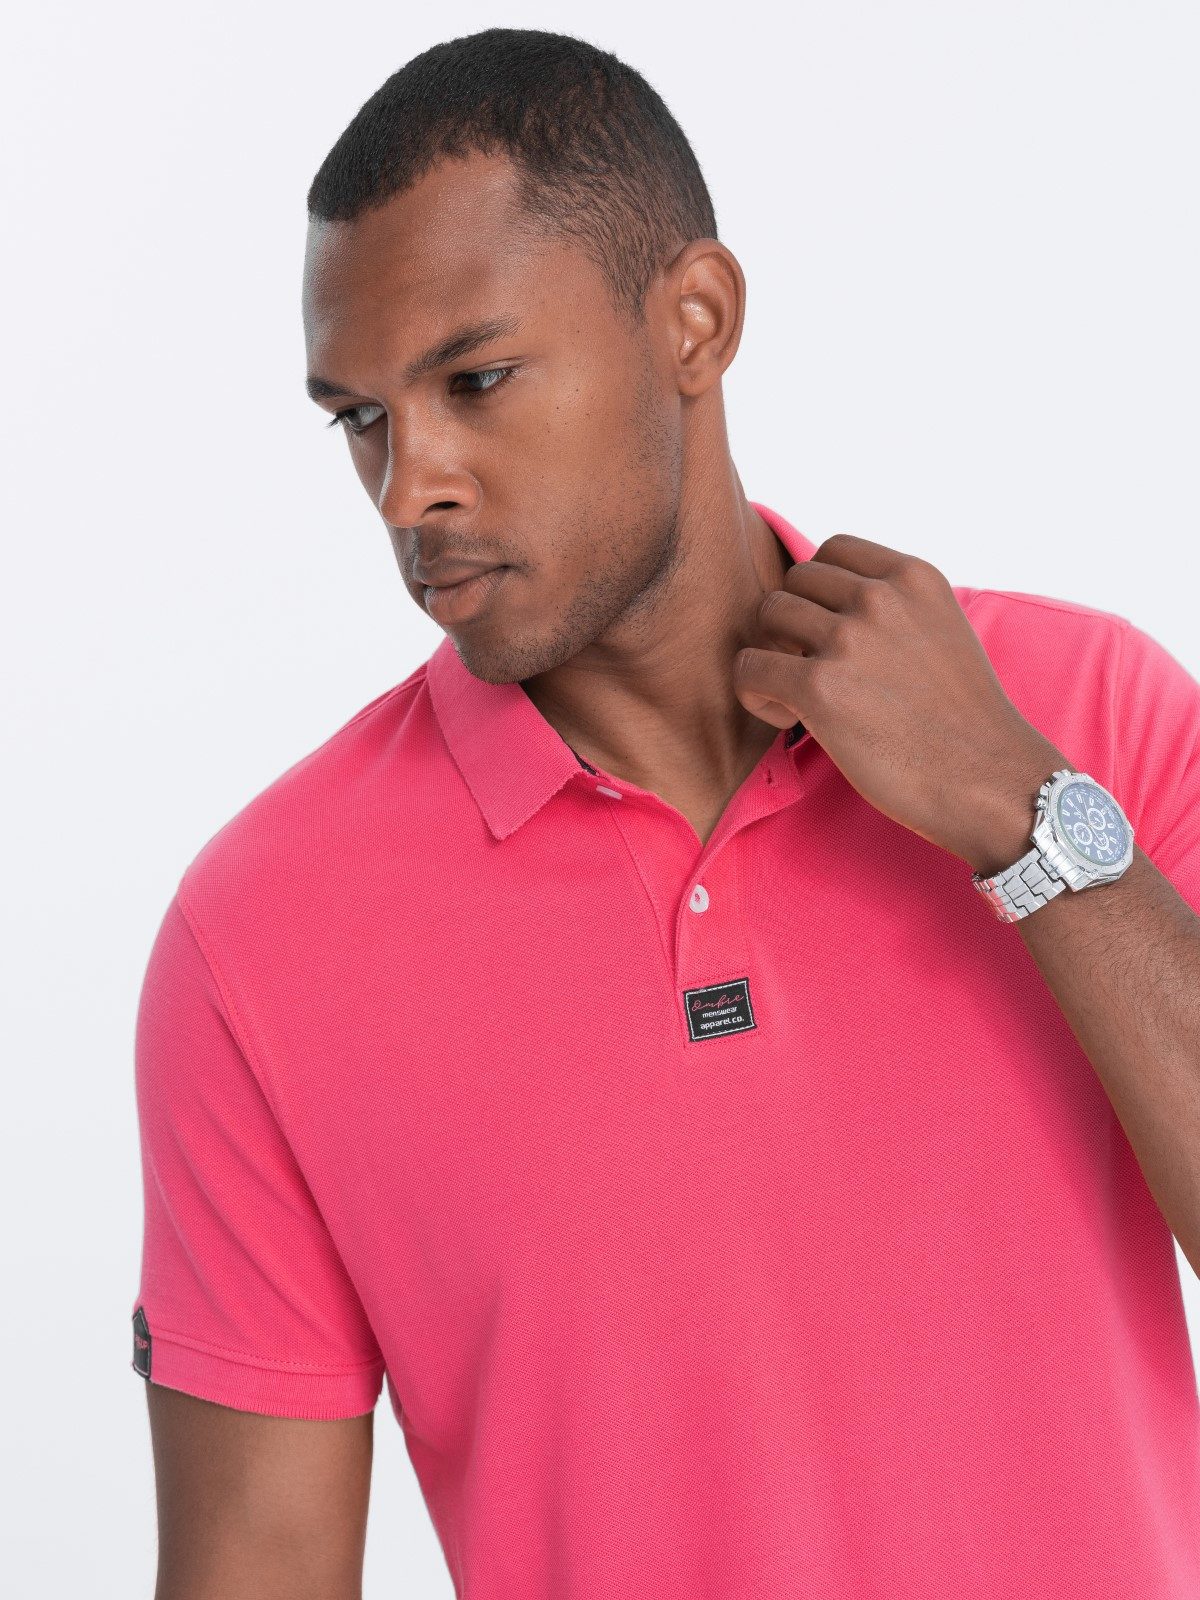 OMBRE Poloshirt Herren-Poloshirt mit Kragen / Neonfarben